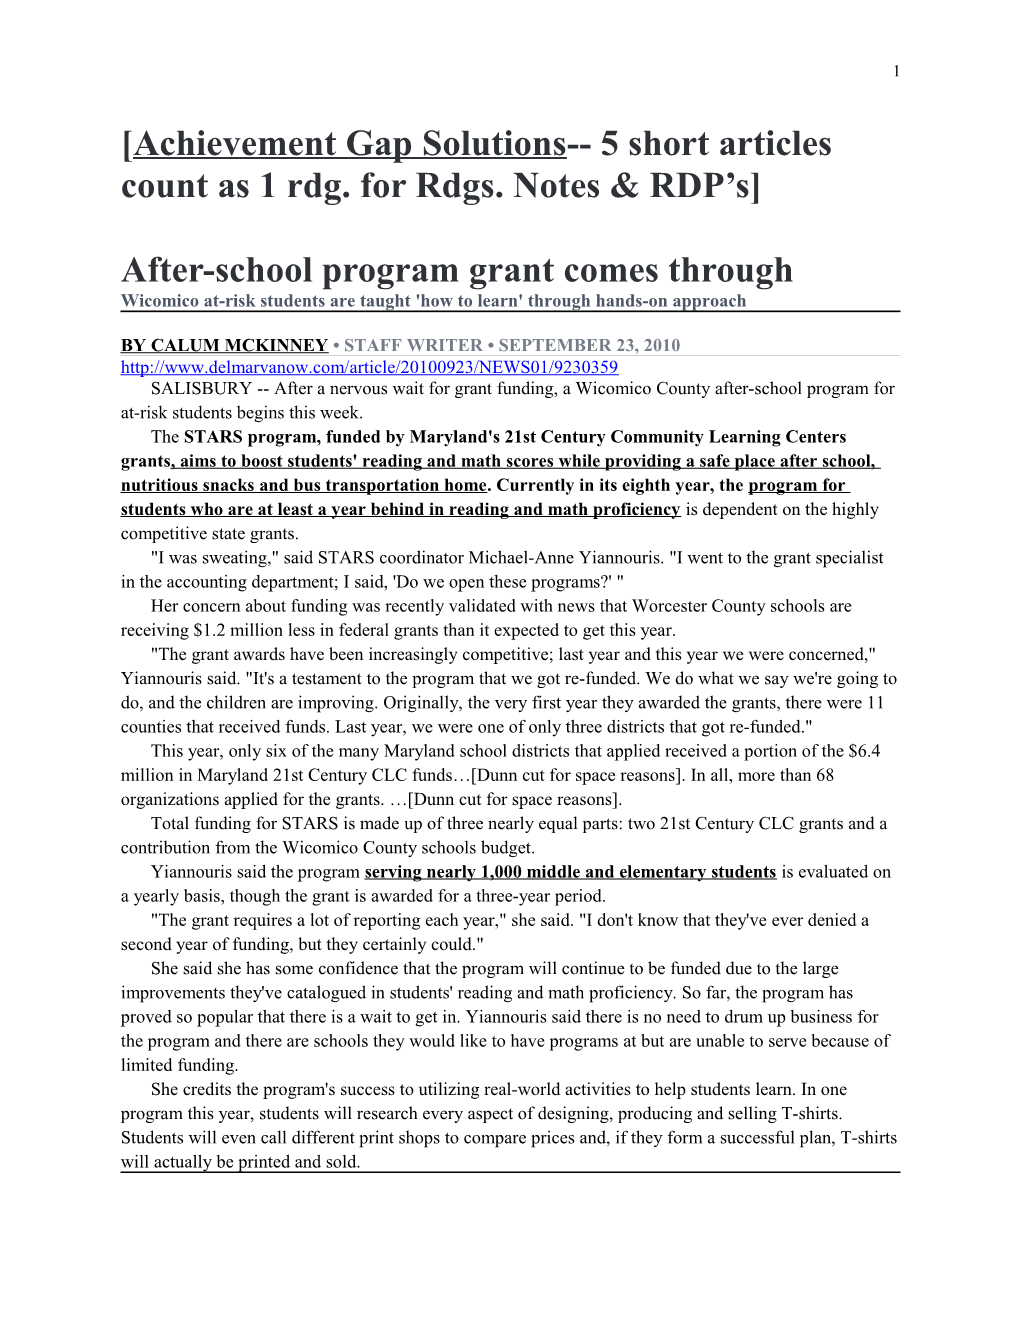 Achievement Gap Solutions 5 Short Articles Count As 1 Rdg. for Rdgs. Notes & RDP S